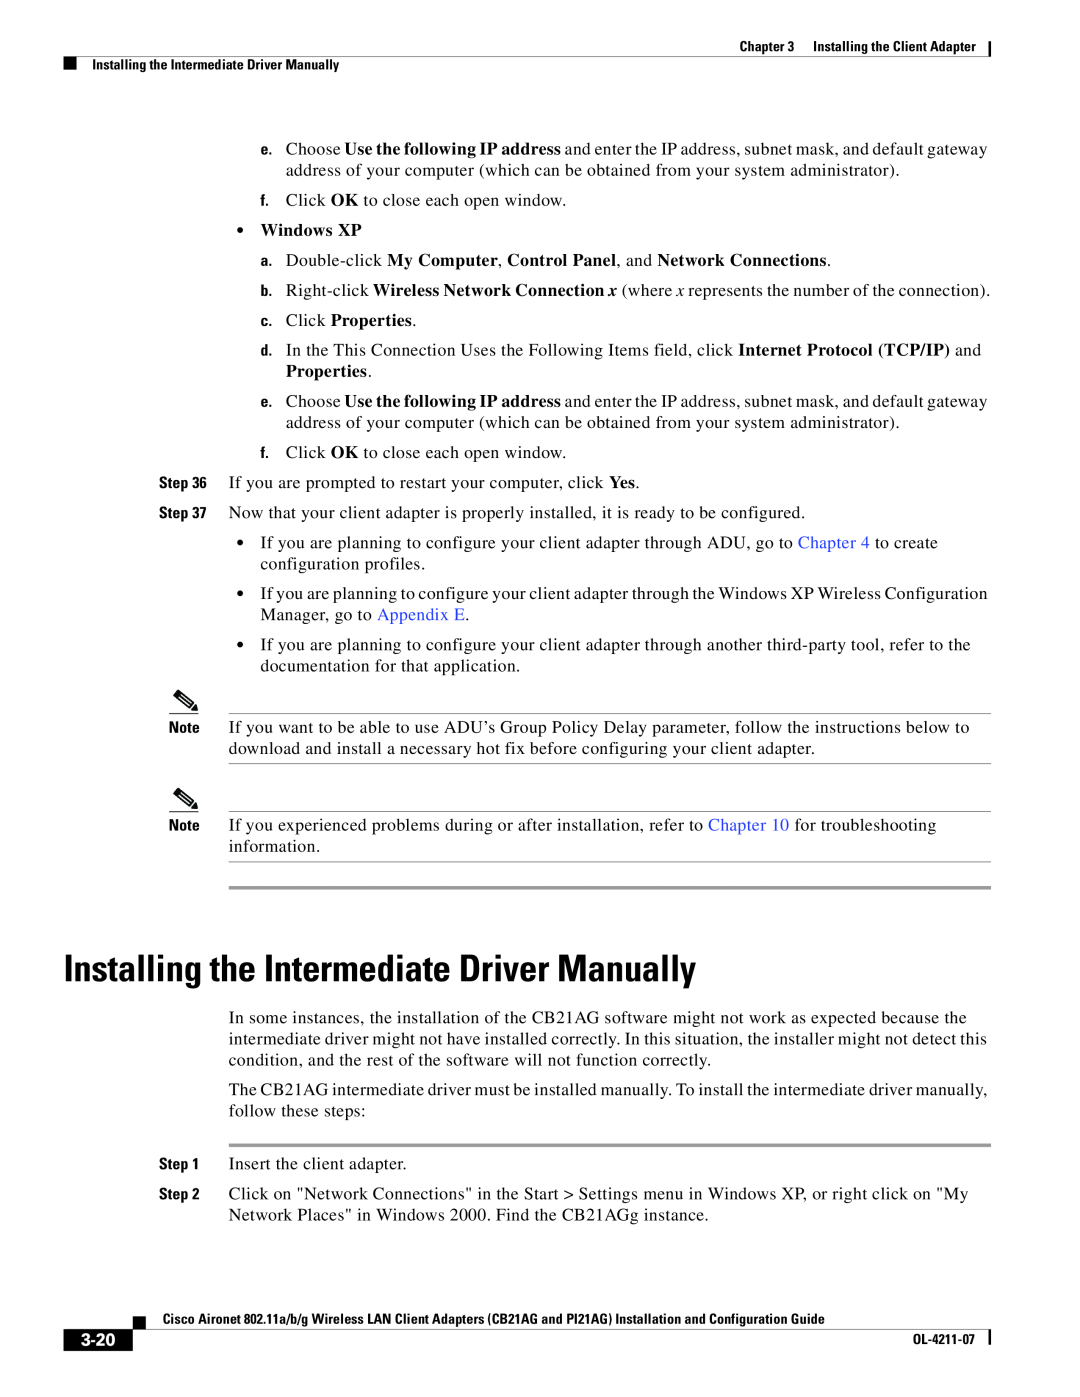 Cisco Systems PI21AG, CB21AG manual Installing the Intermediate Driver Manually, Windows XP, 3-20, c. Click Properties 